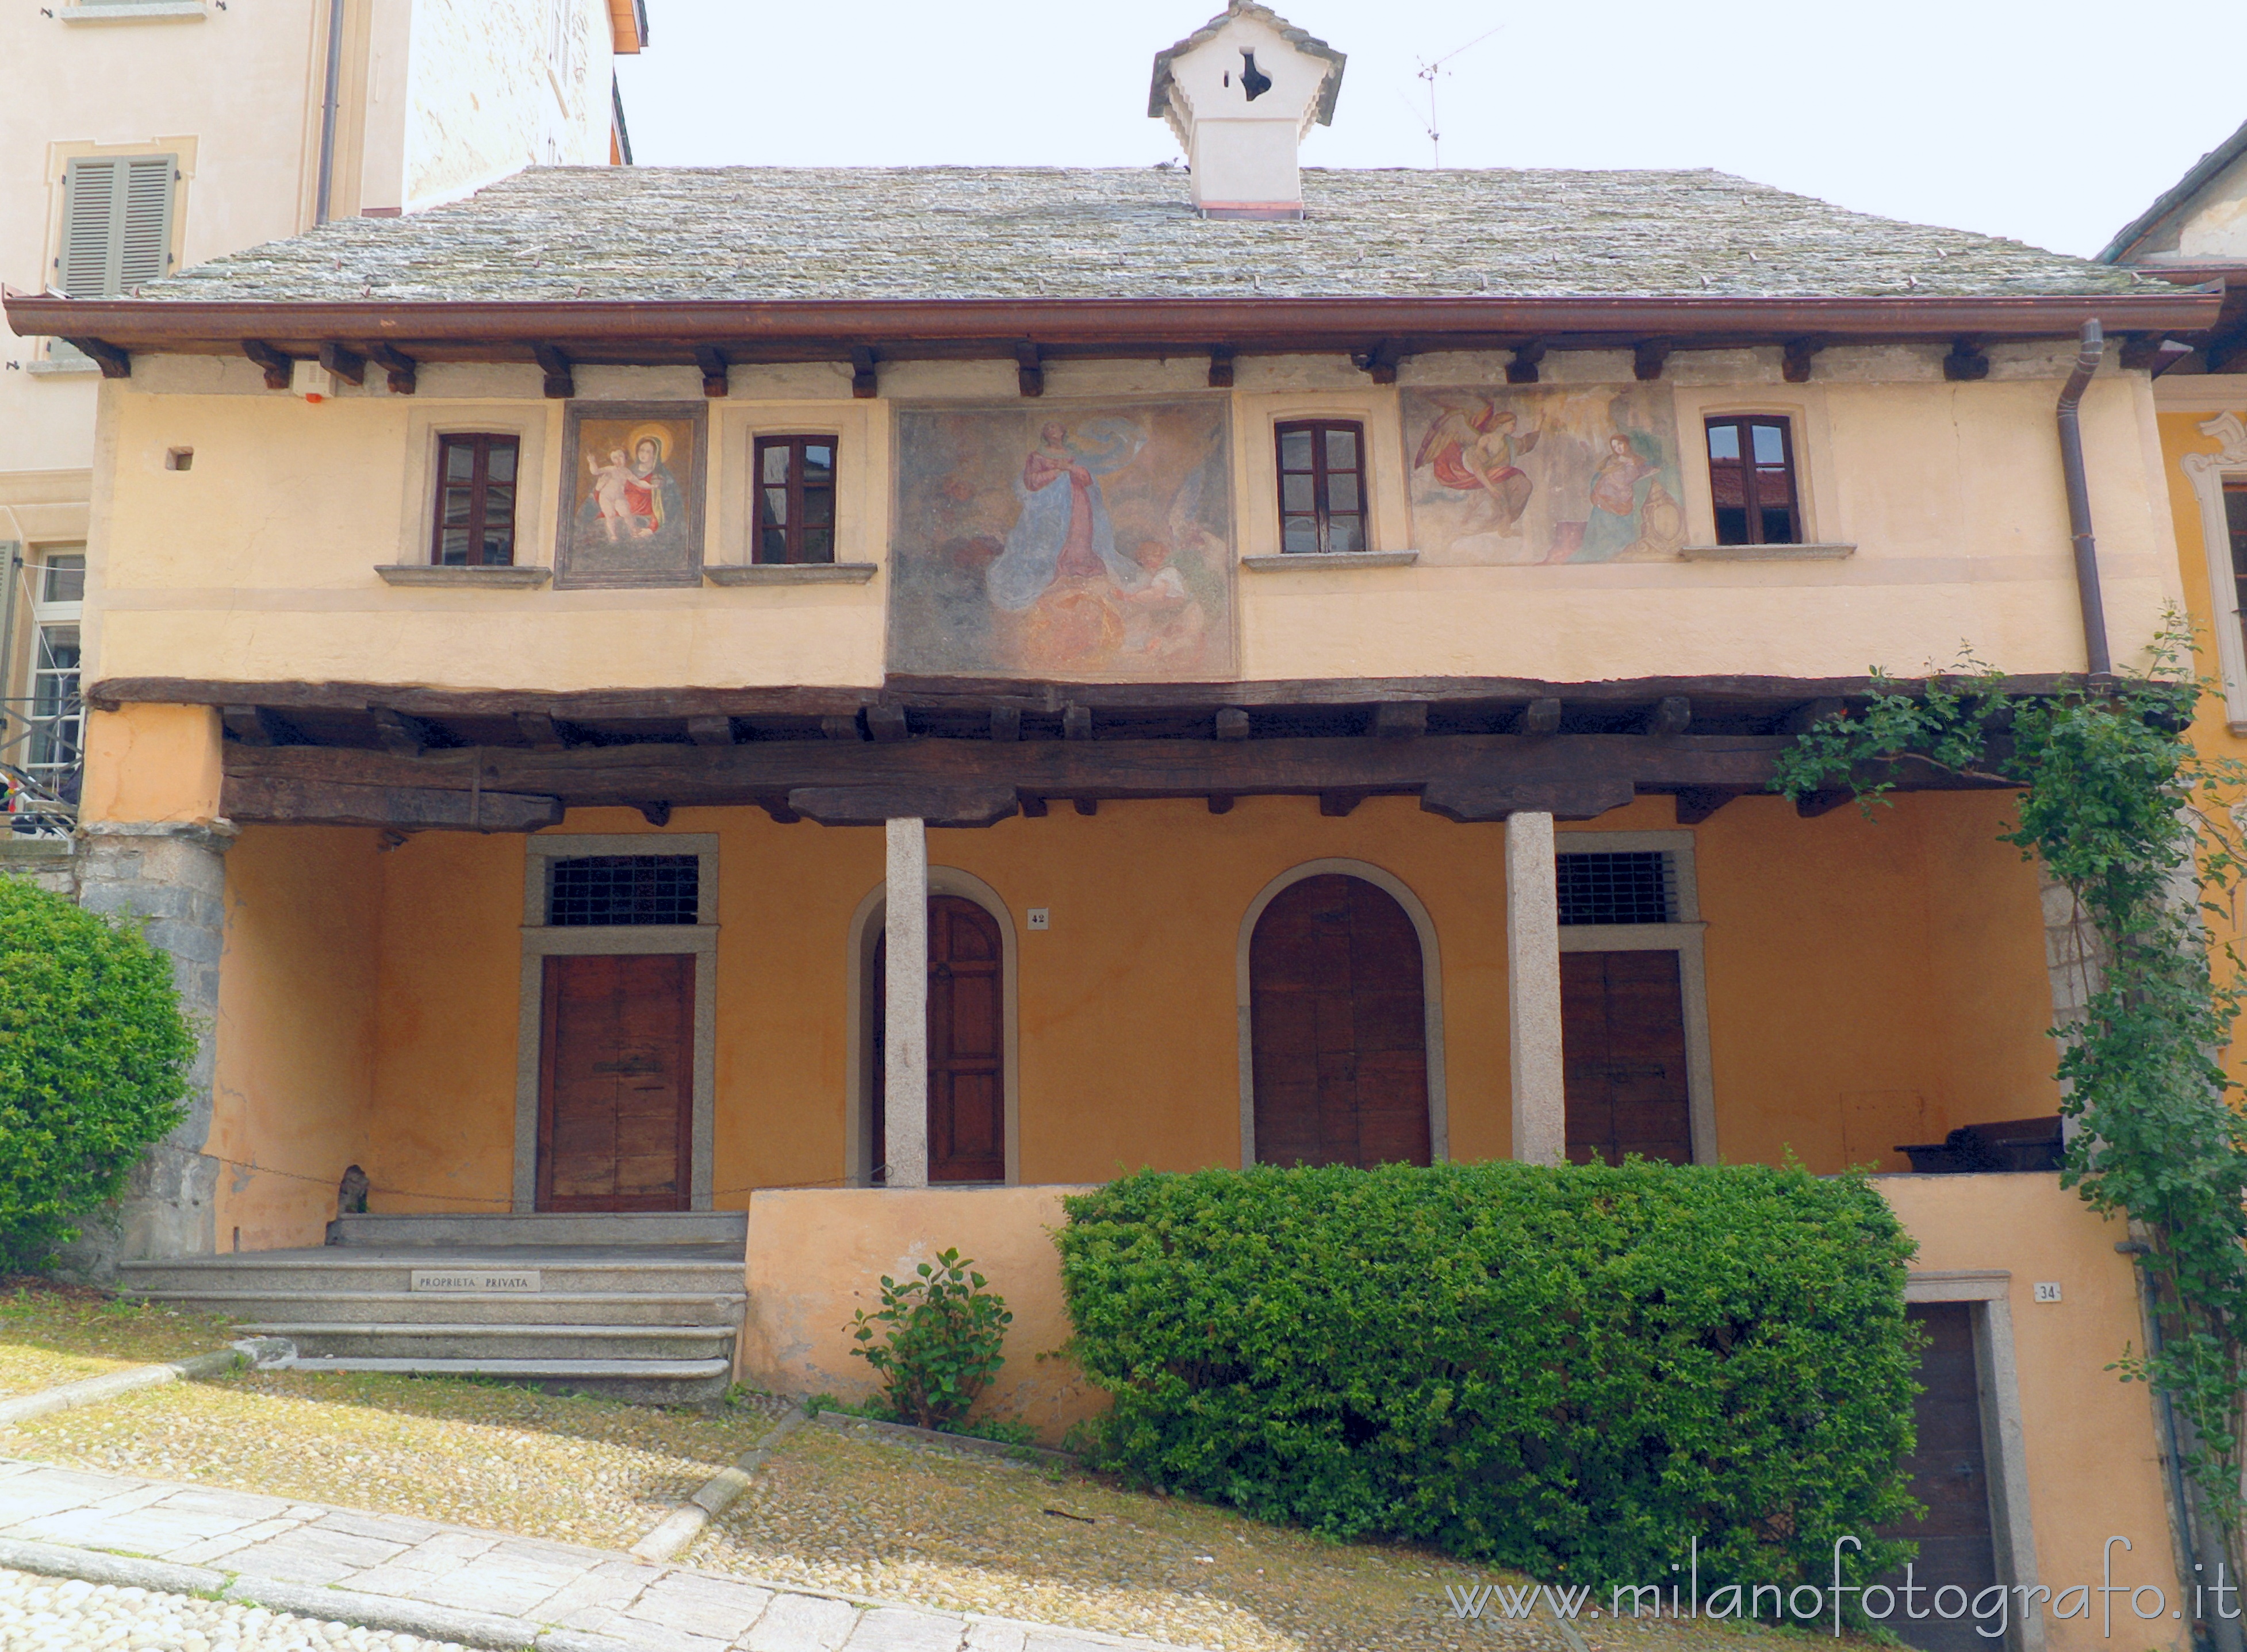 Orta San Giulio (Novara, Italy): House Marangoni (now Capuani) also known as House of the Dwarves - Orta San Giulio (Novara, Italy)